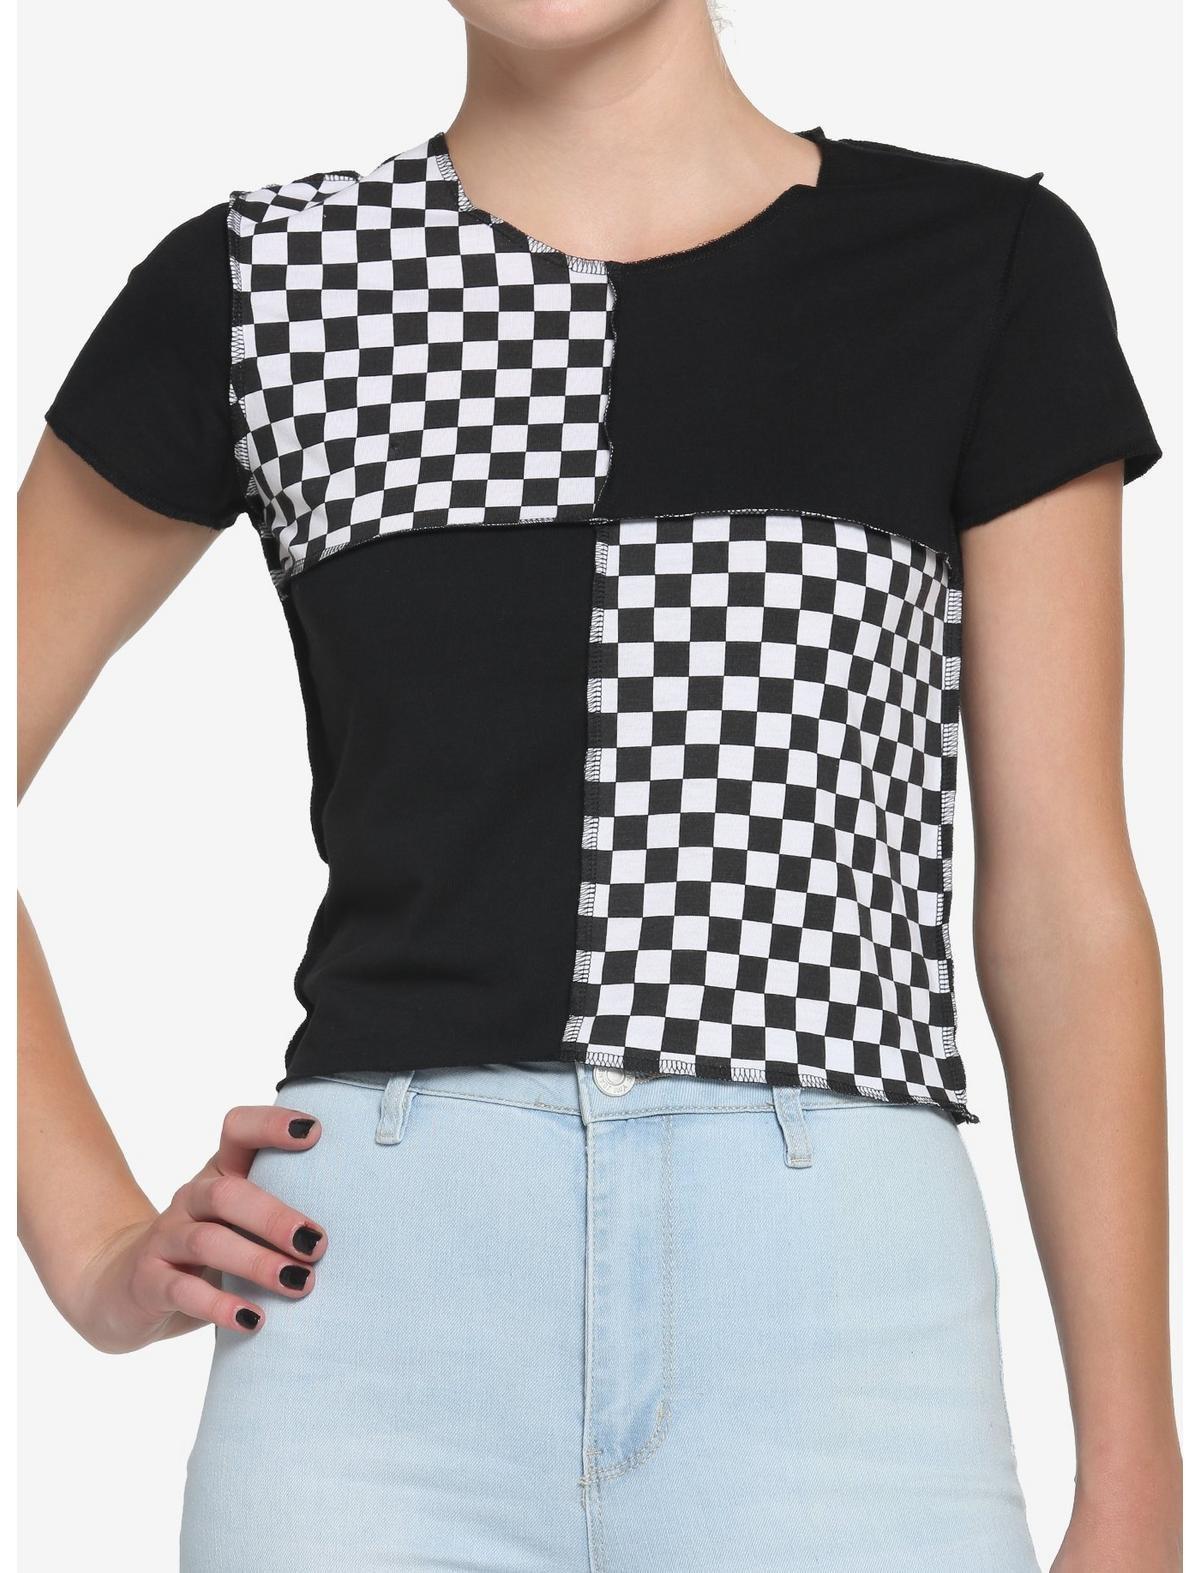 Black & White Checkered Color-Block Girls Baby T-Shirt